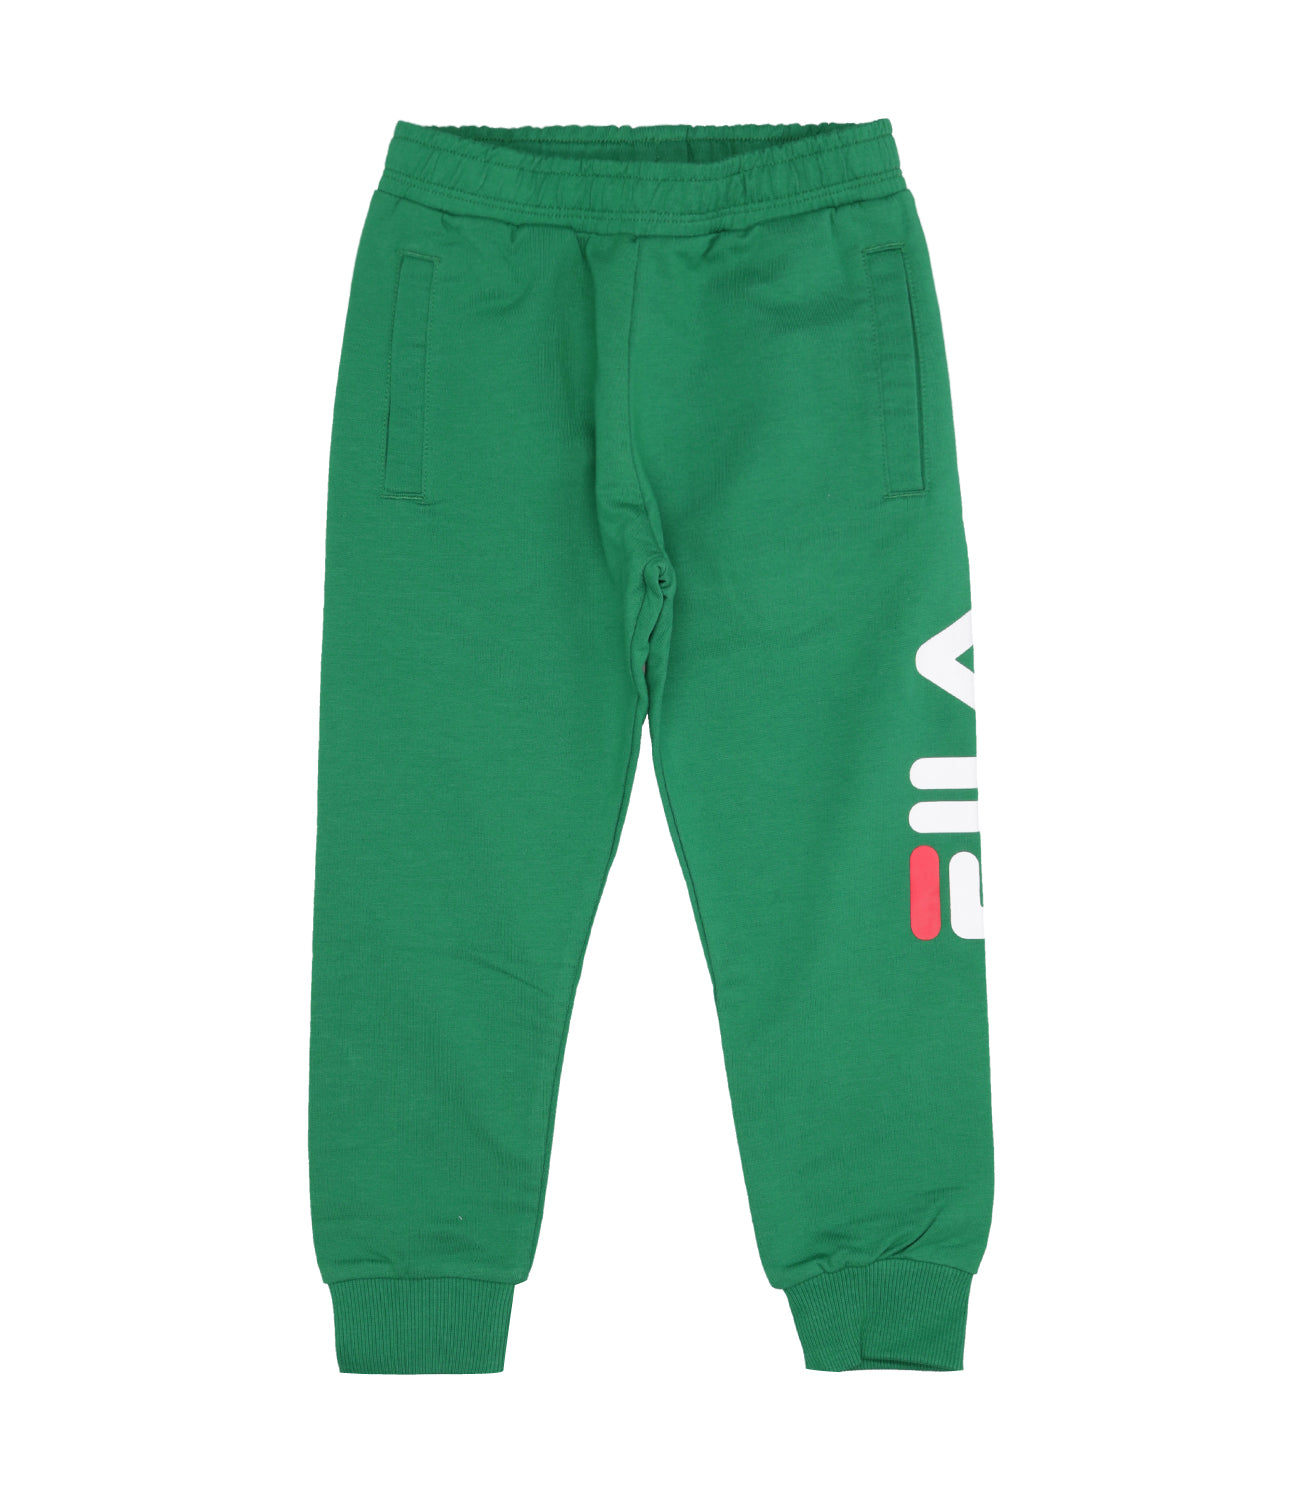 Fila Kids | Pantalone Sportivo Balboa Verde